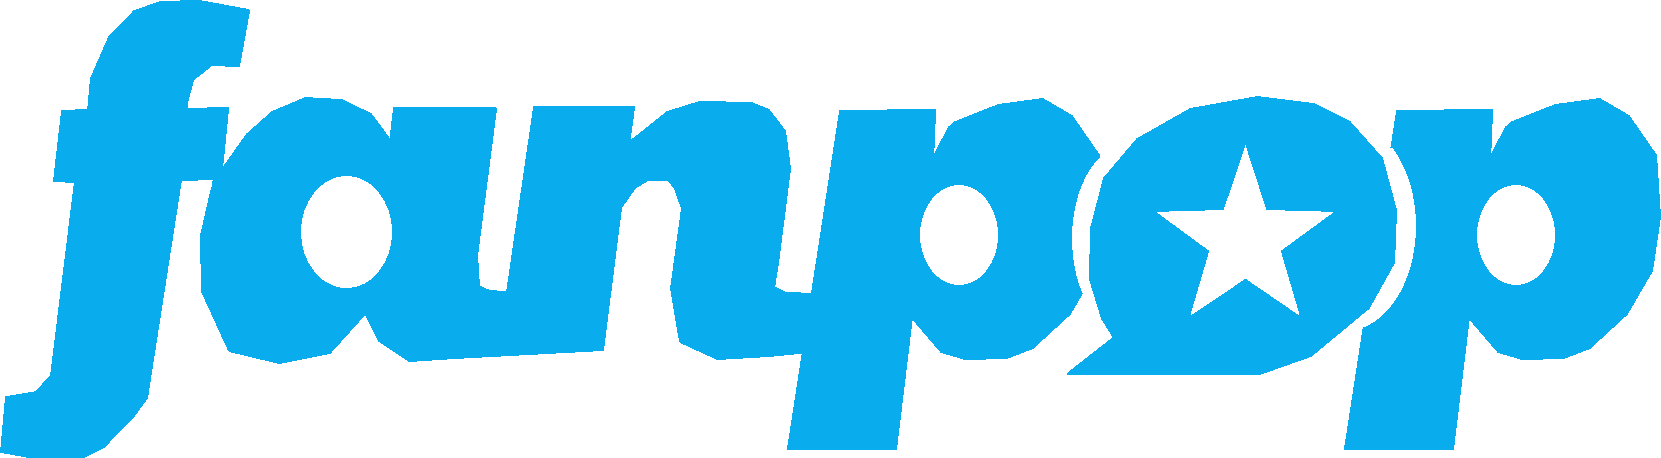 Fanpop Logo - Image Logo.png